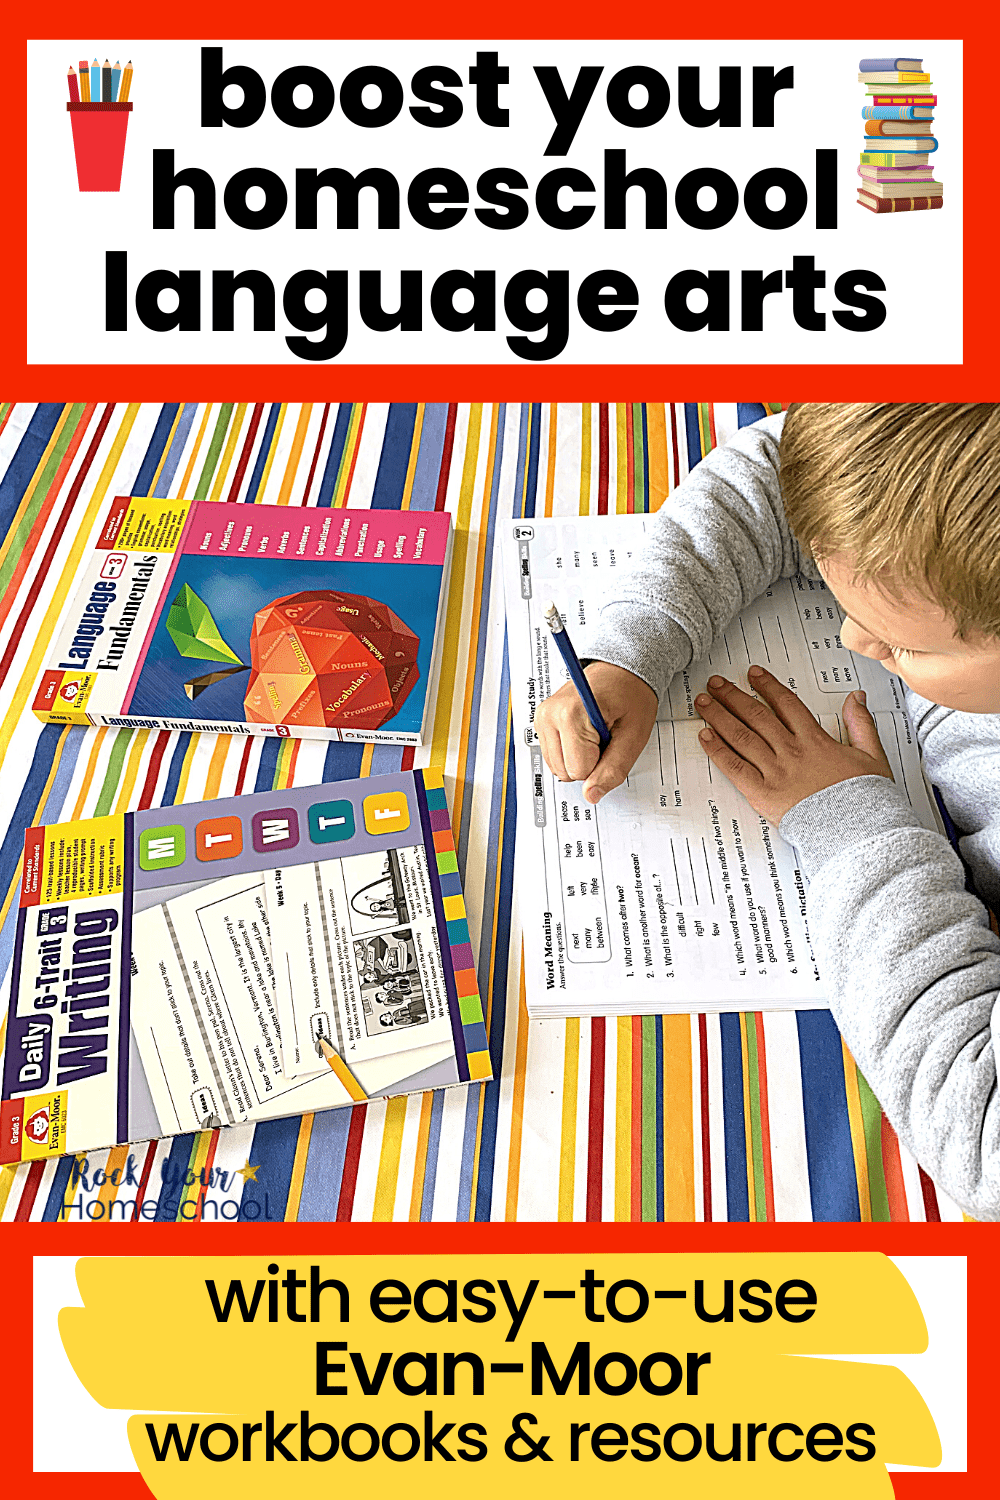 How to Use Evan-Moor Workbooks to Boost Your Homeschool Language Arts